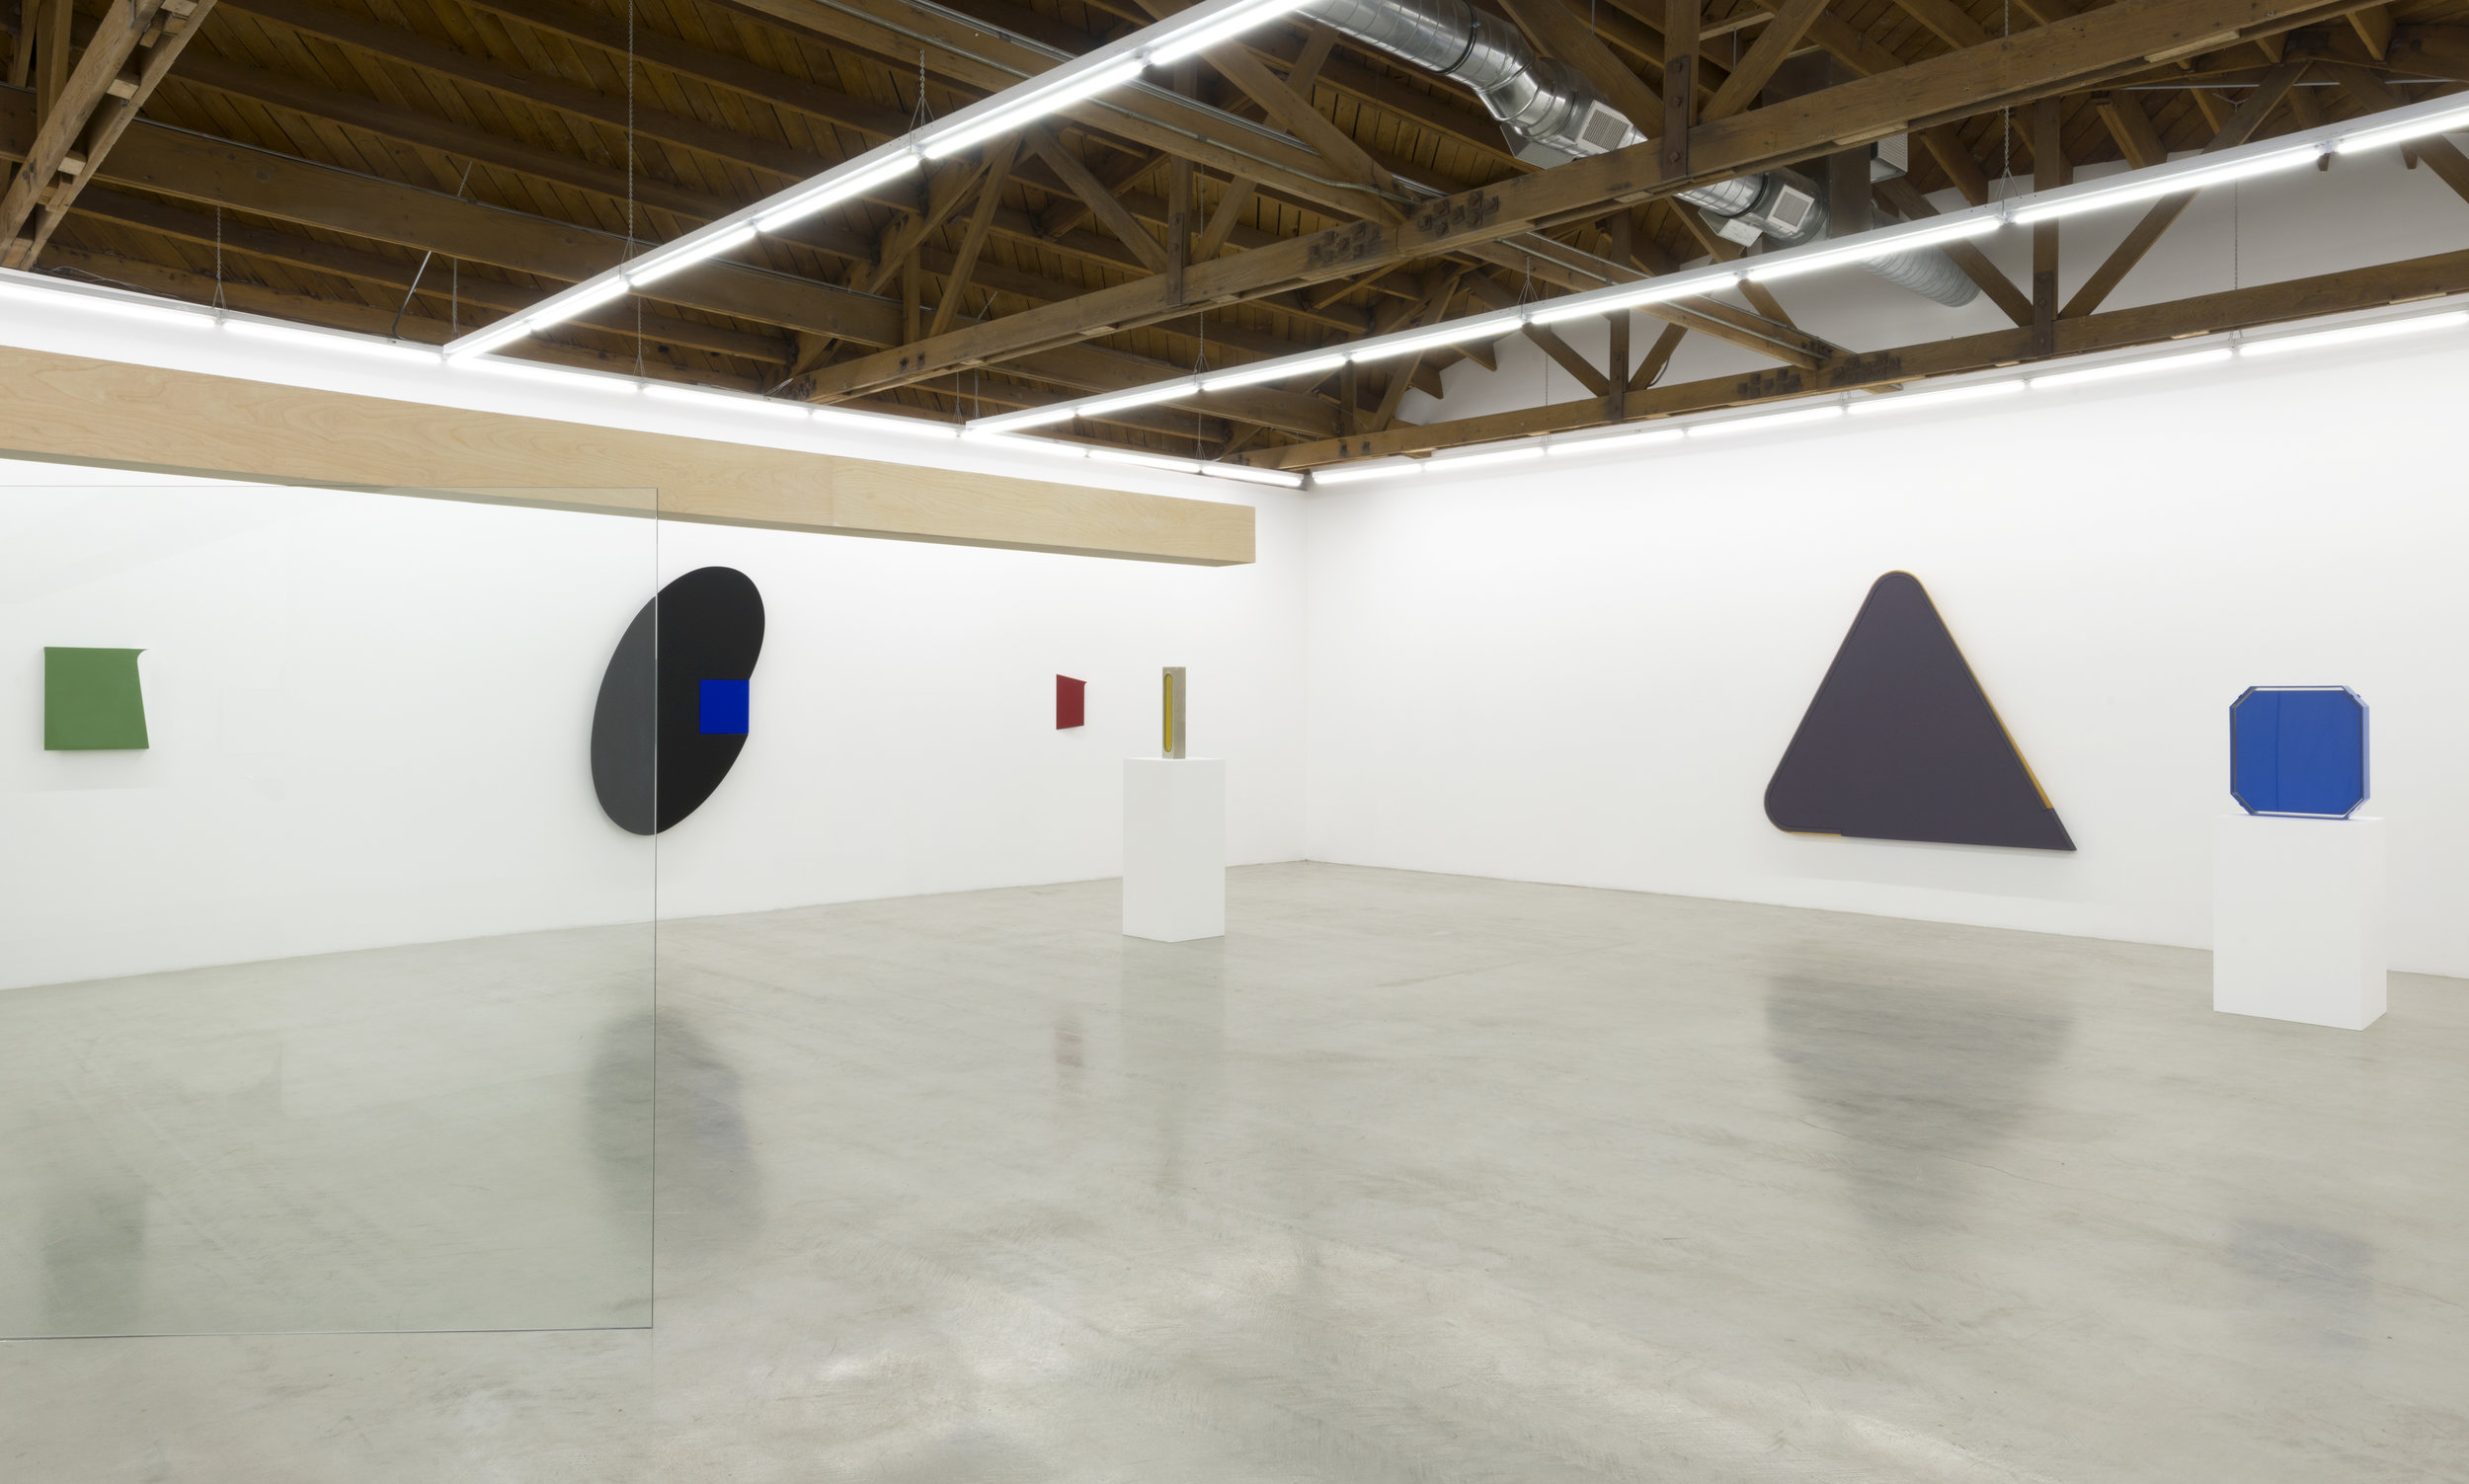   Parrasch Heijnen Gallery,&nbsp; Los Angeles 2017 